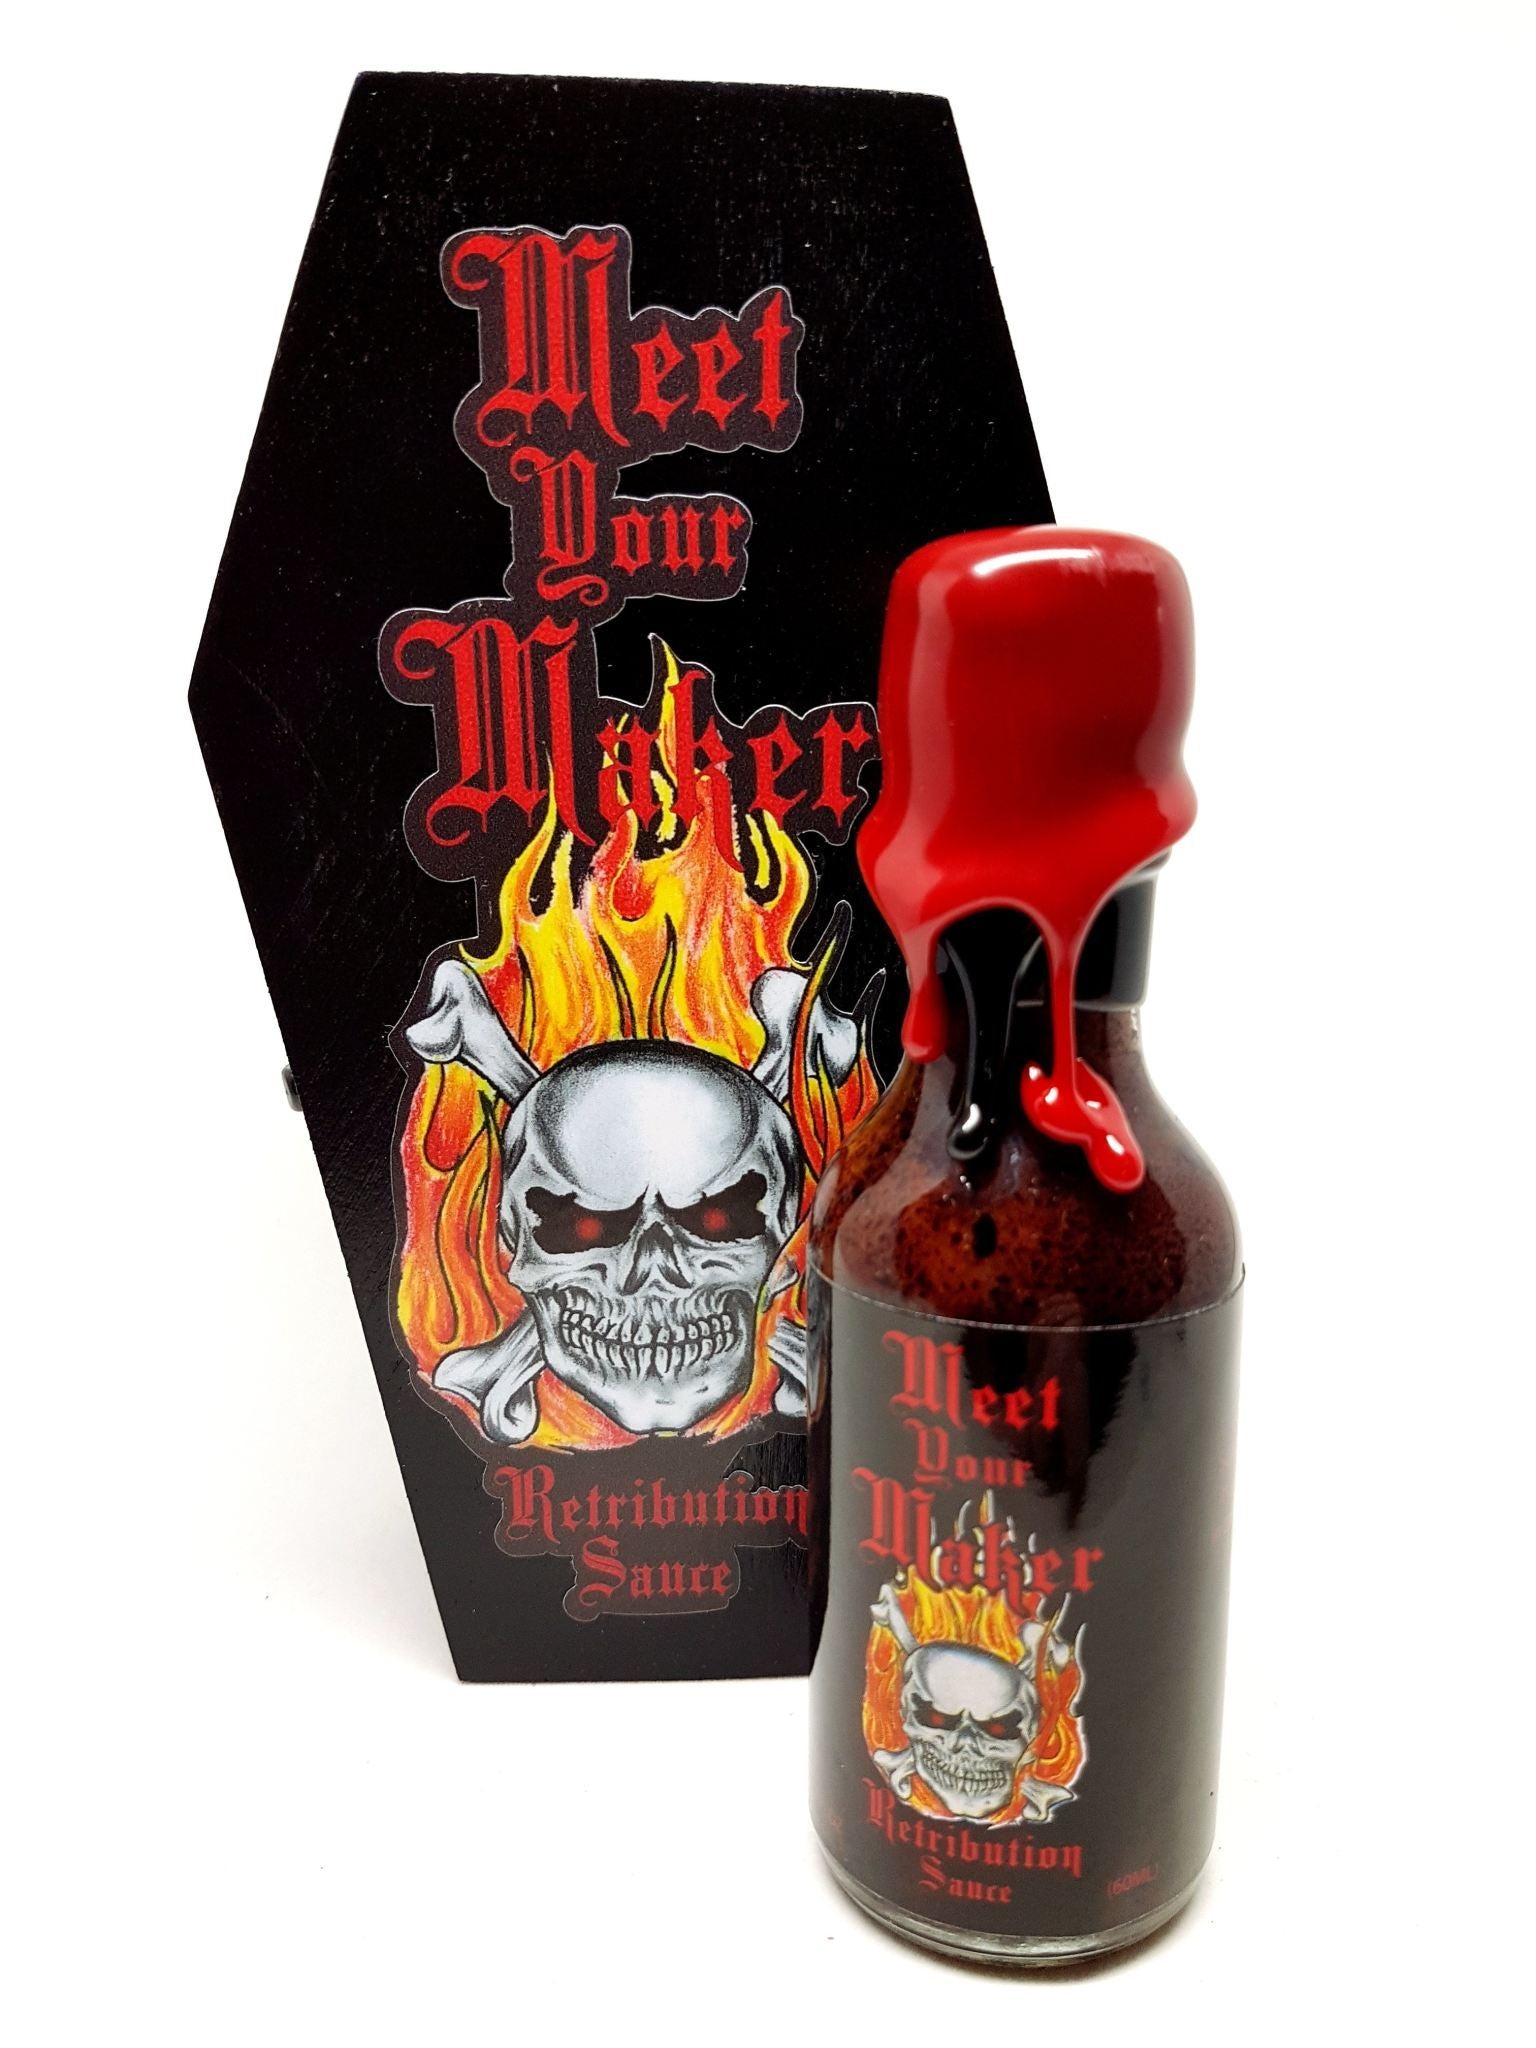 Heavenly Heat's "Meet Your Maker" (World's Hottest Hot Sauce)